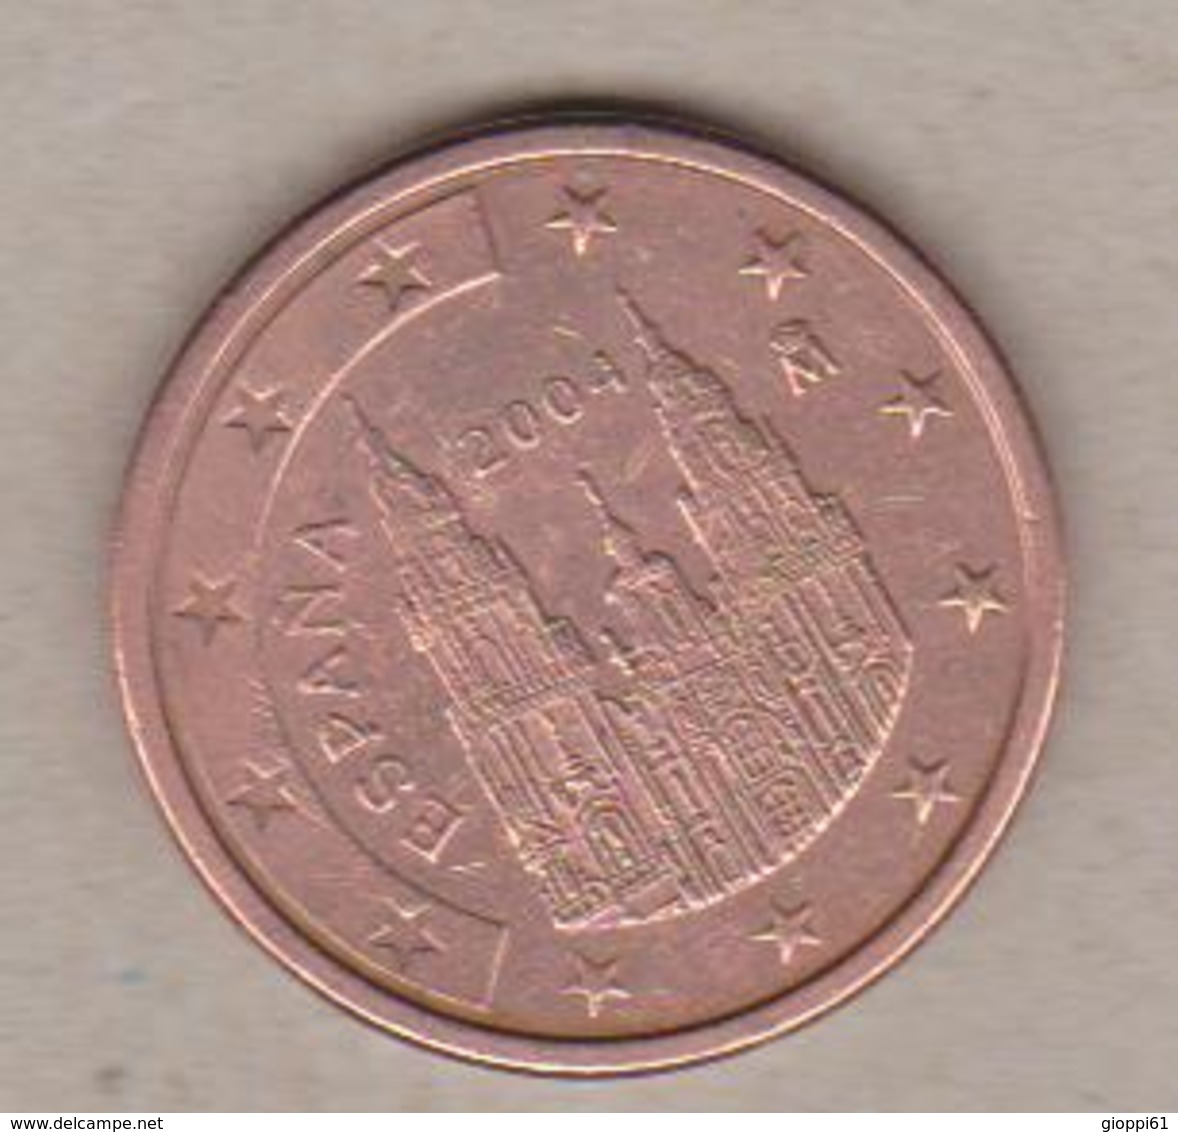 2004 Spagna 0,05c Circolata (fronte E Retro) - Spagna